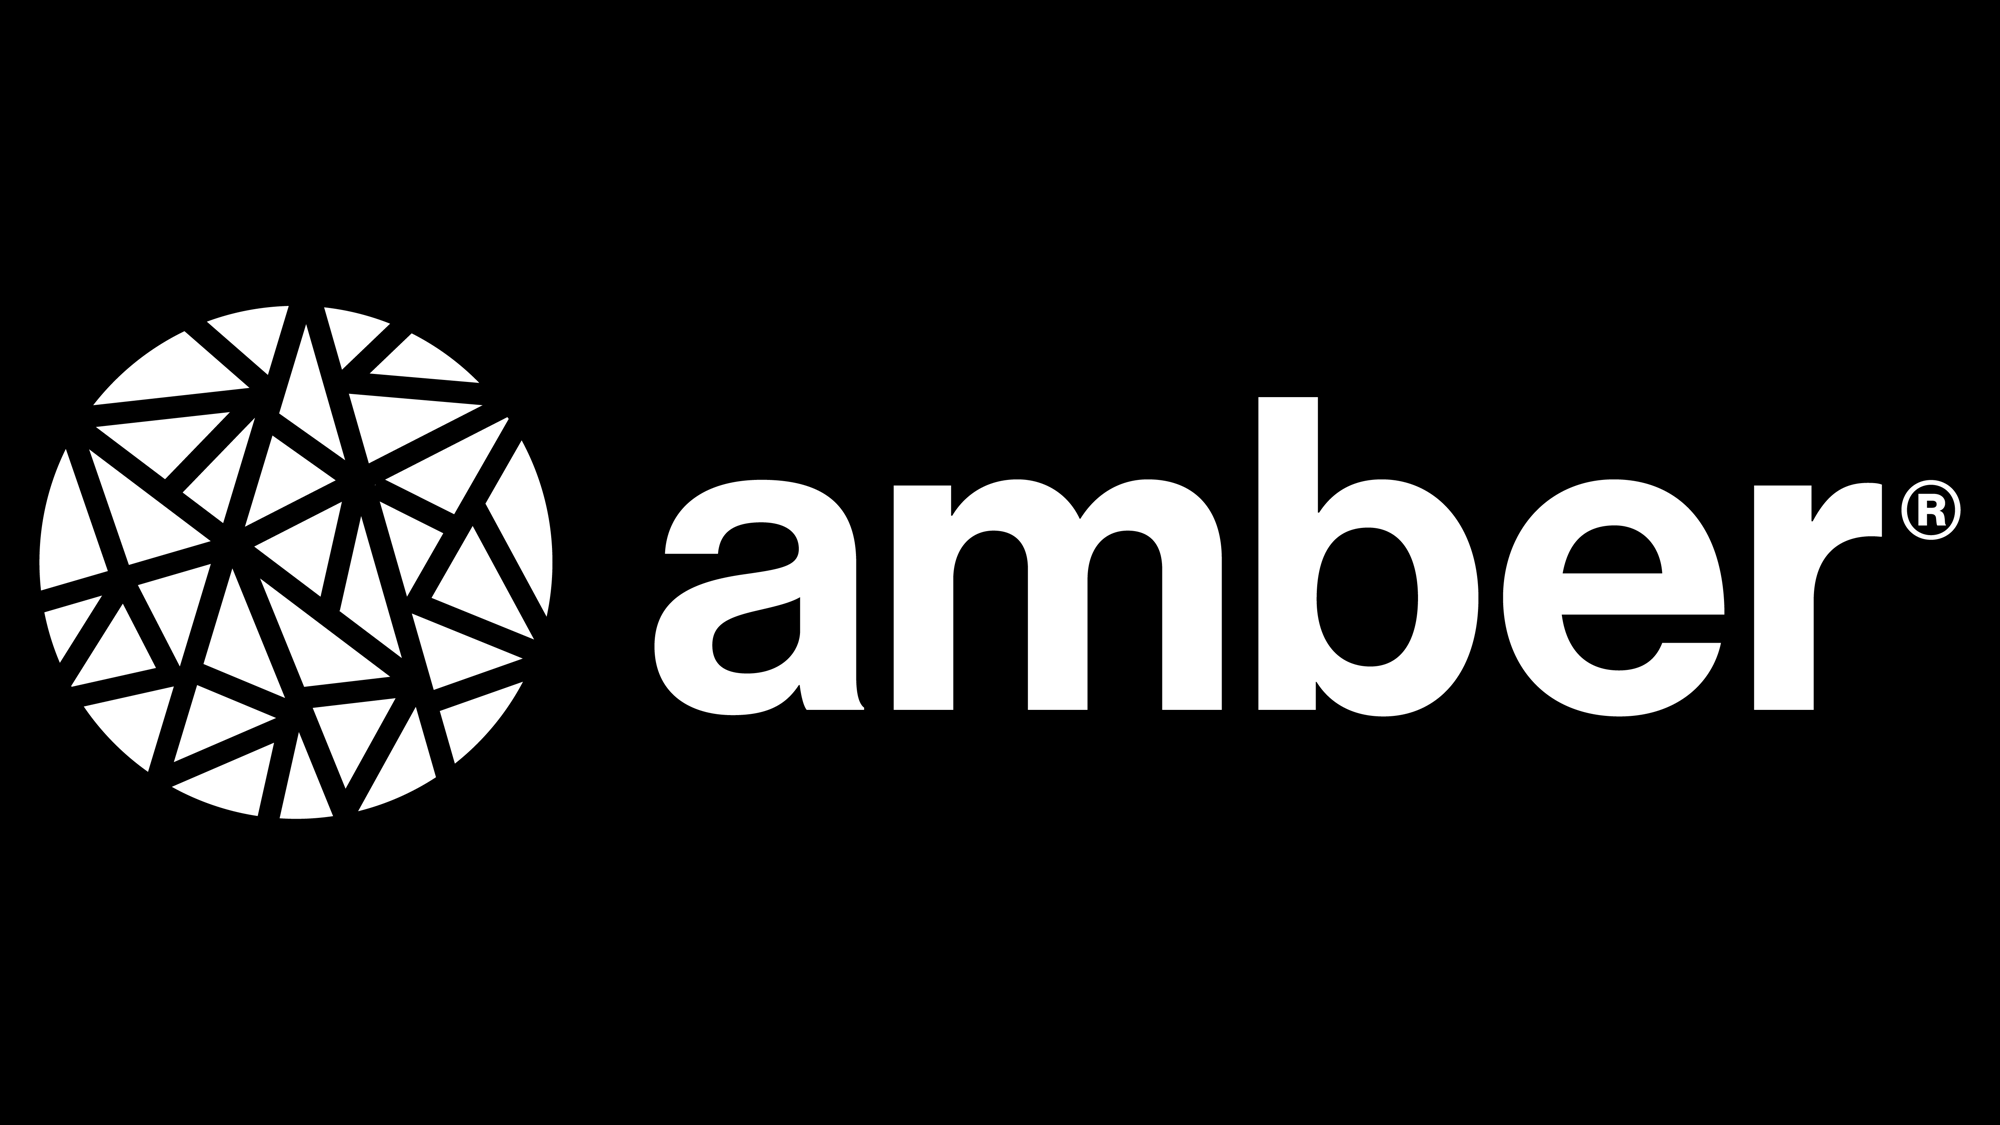 Amber logo on a white background.